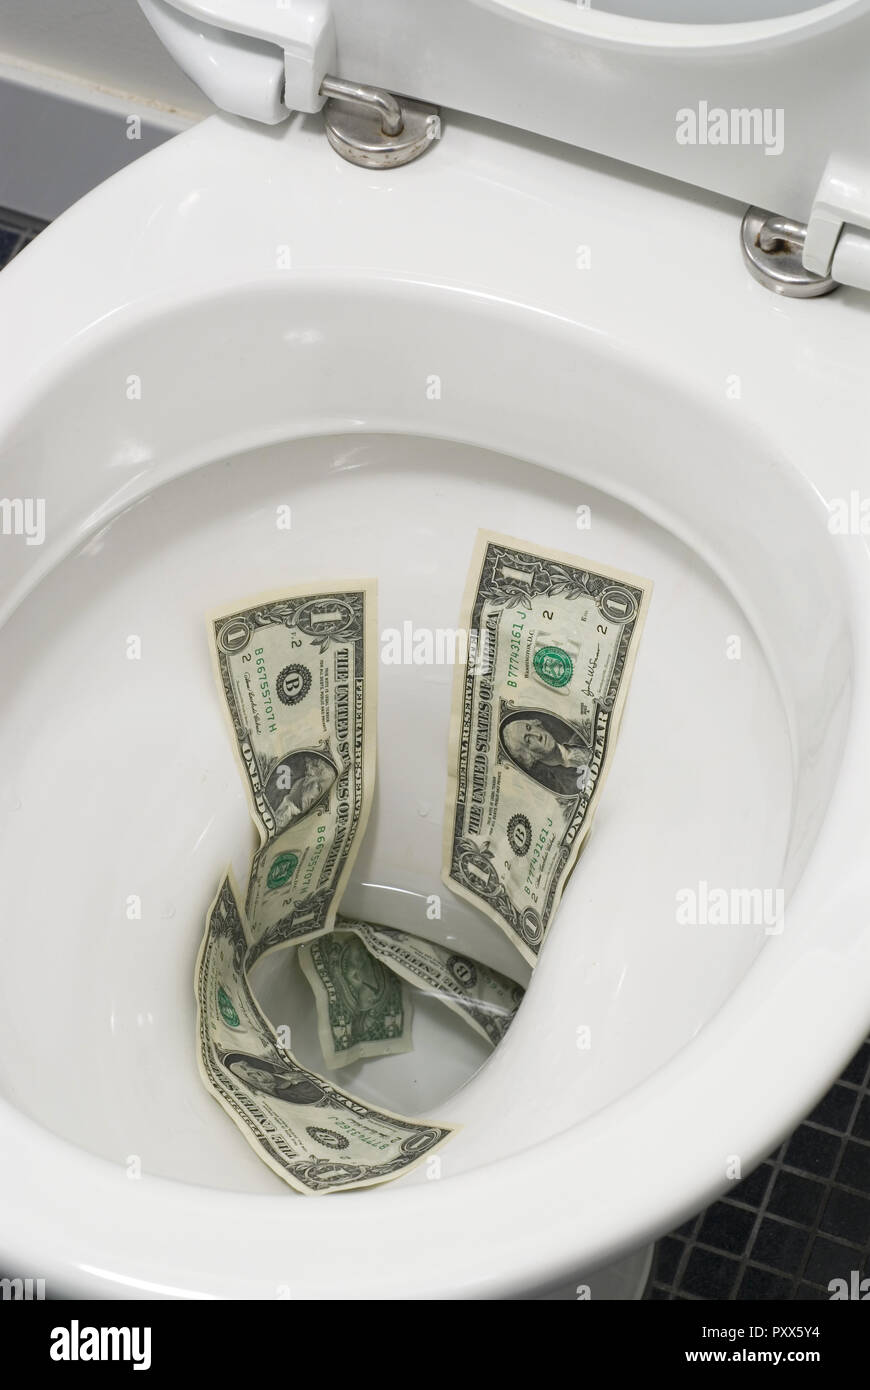 Dollar bills flushed down the toilet Stock Photo - Alamy